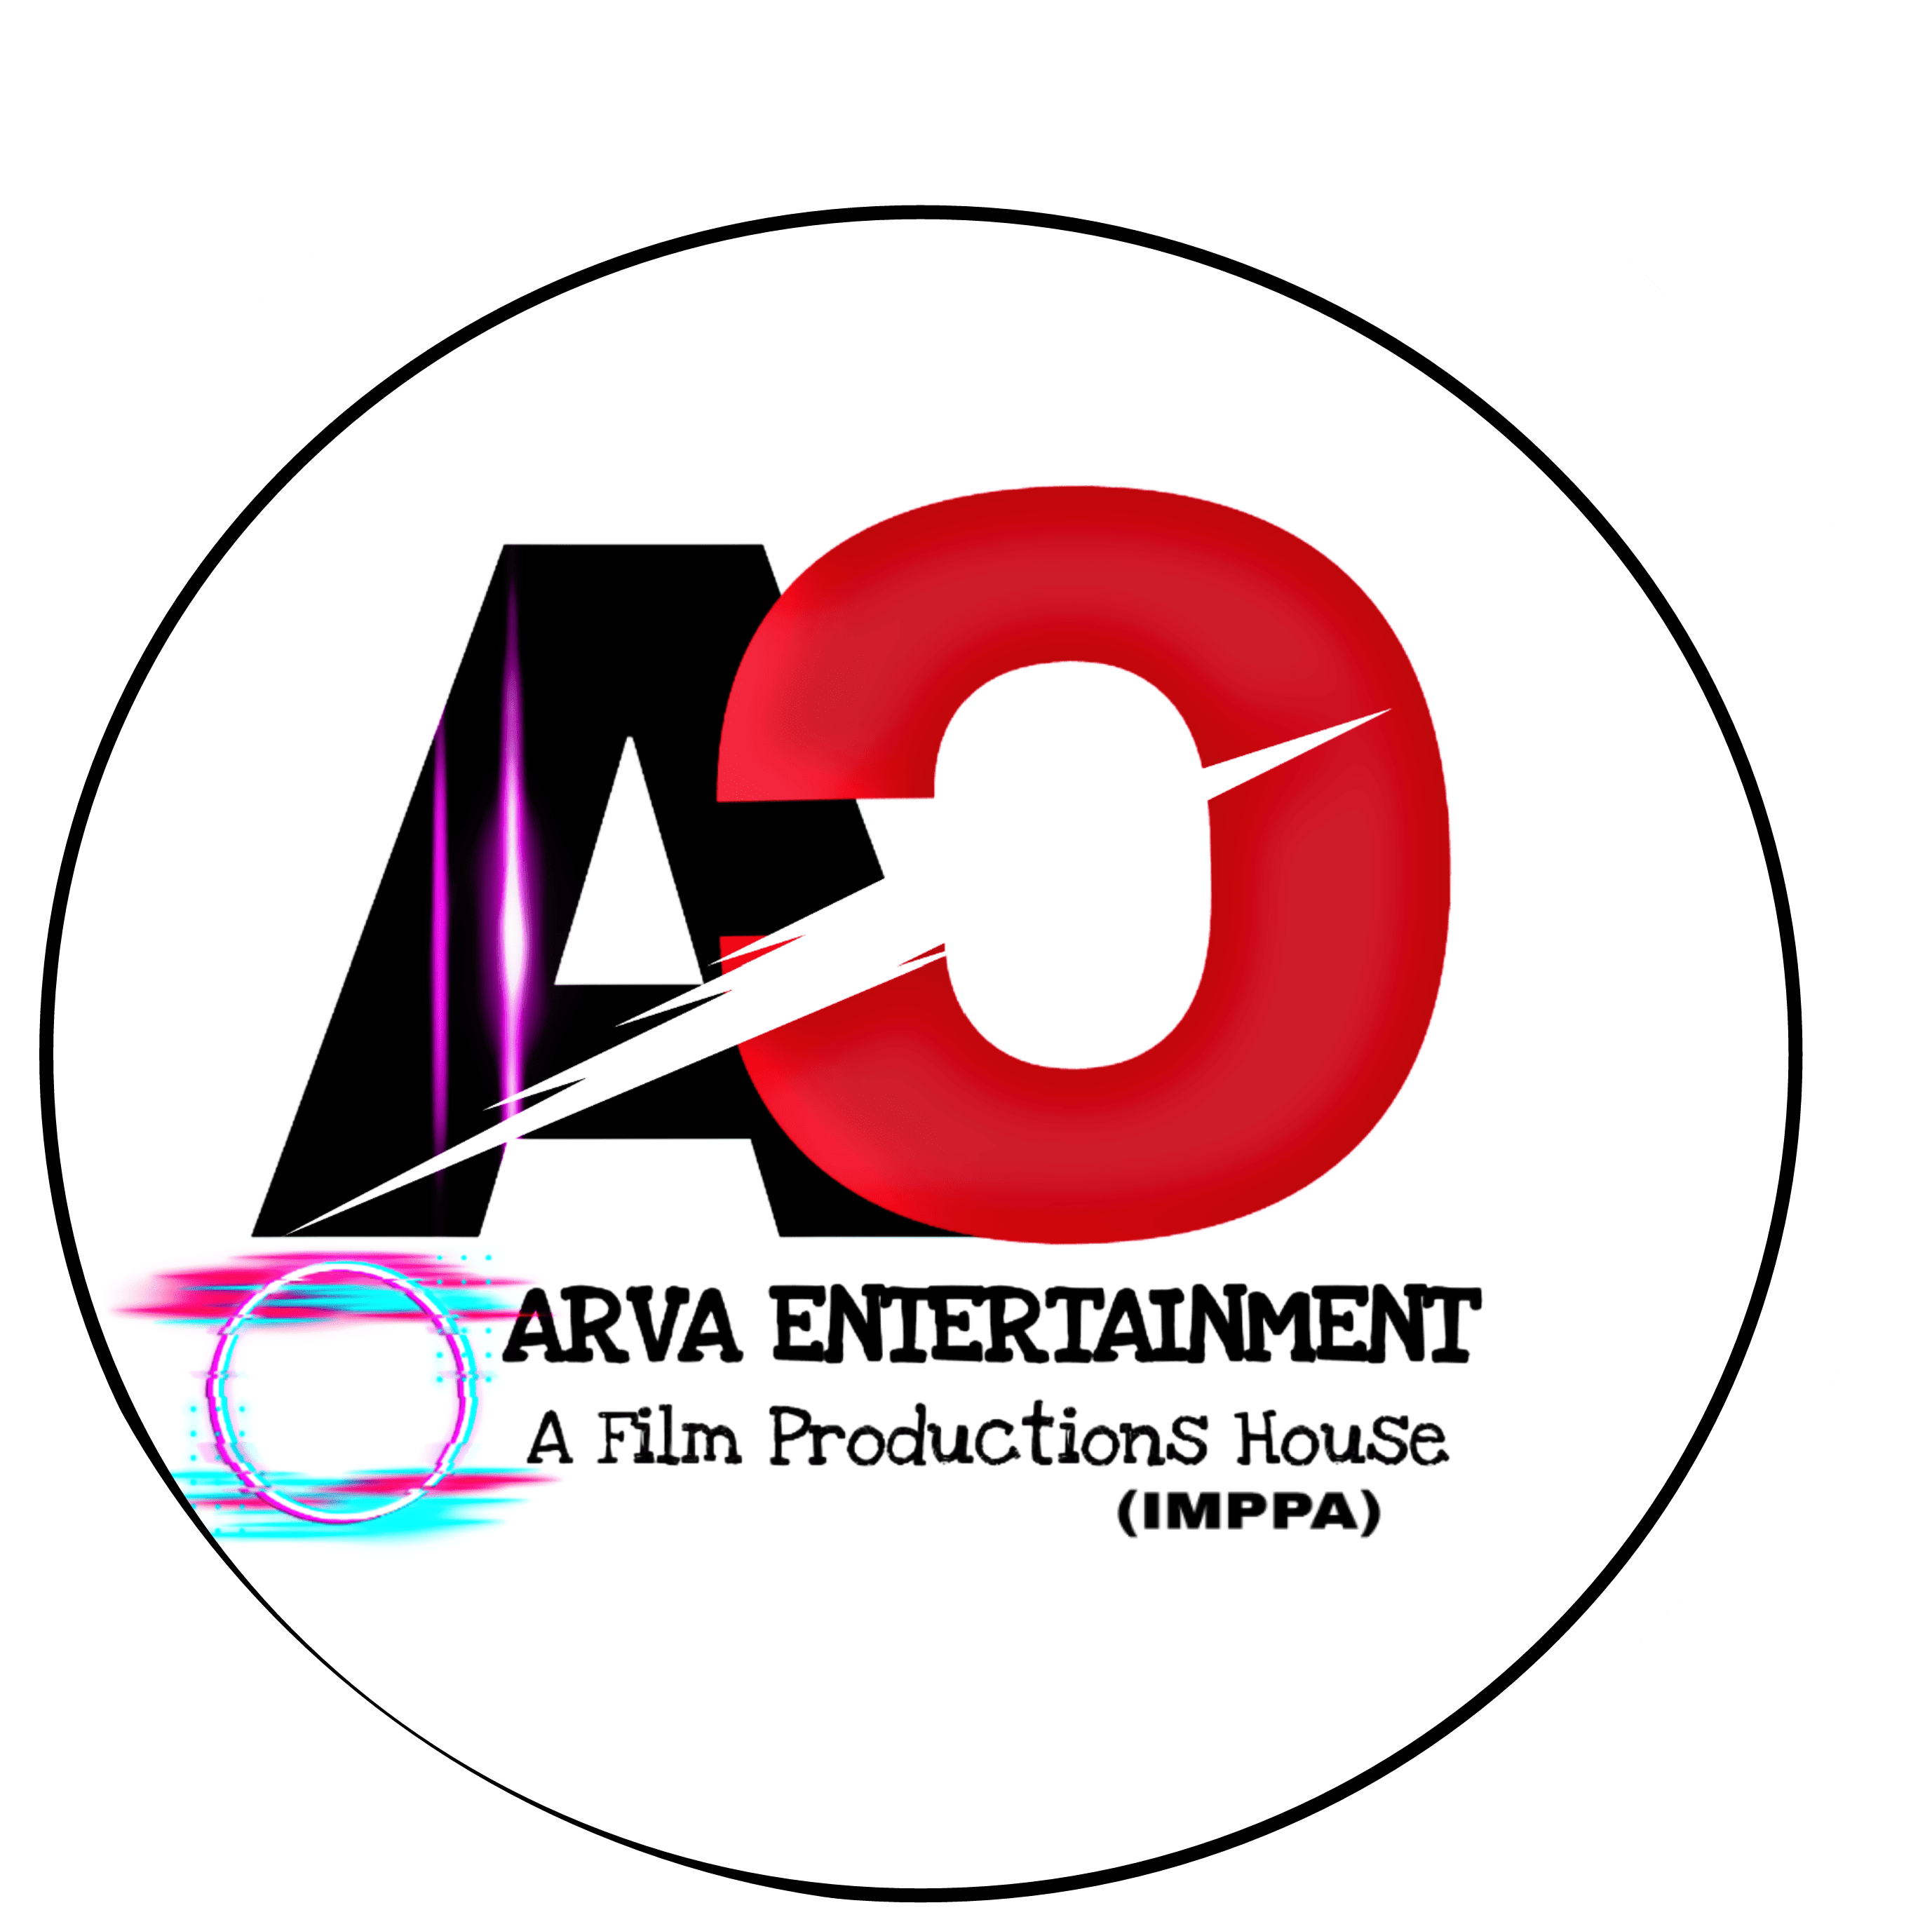 Arva Entertainment